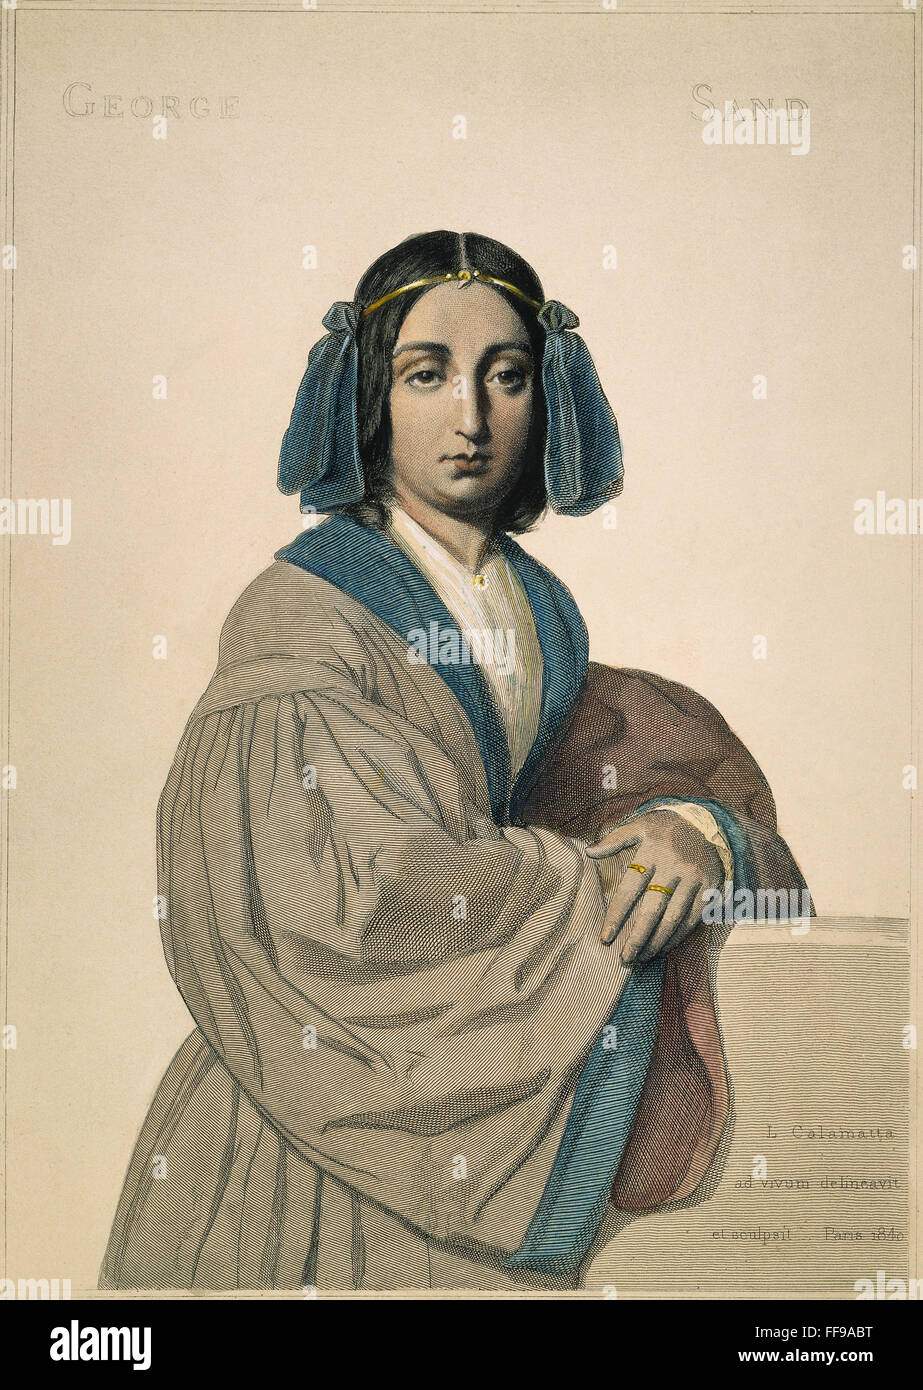 GEORGE SAND (1804-1876). /nFrench novelist: etching, 1840, by Luigi Calamatta. Stock Photo